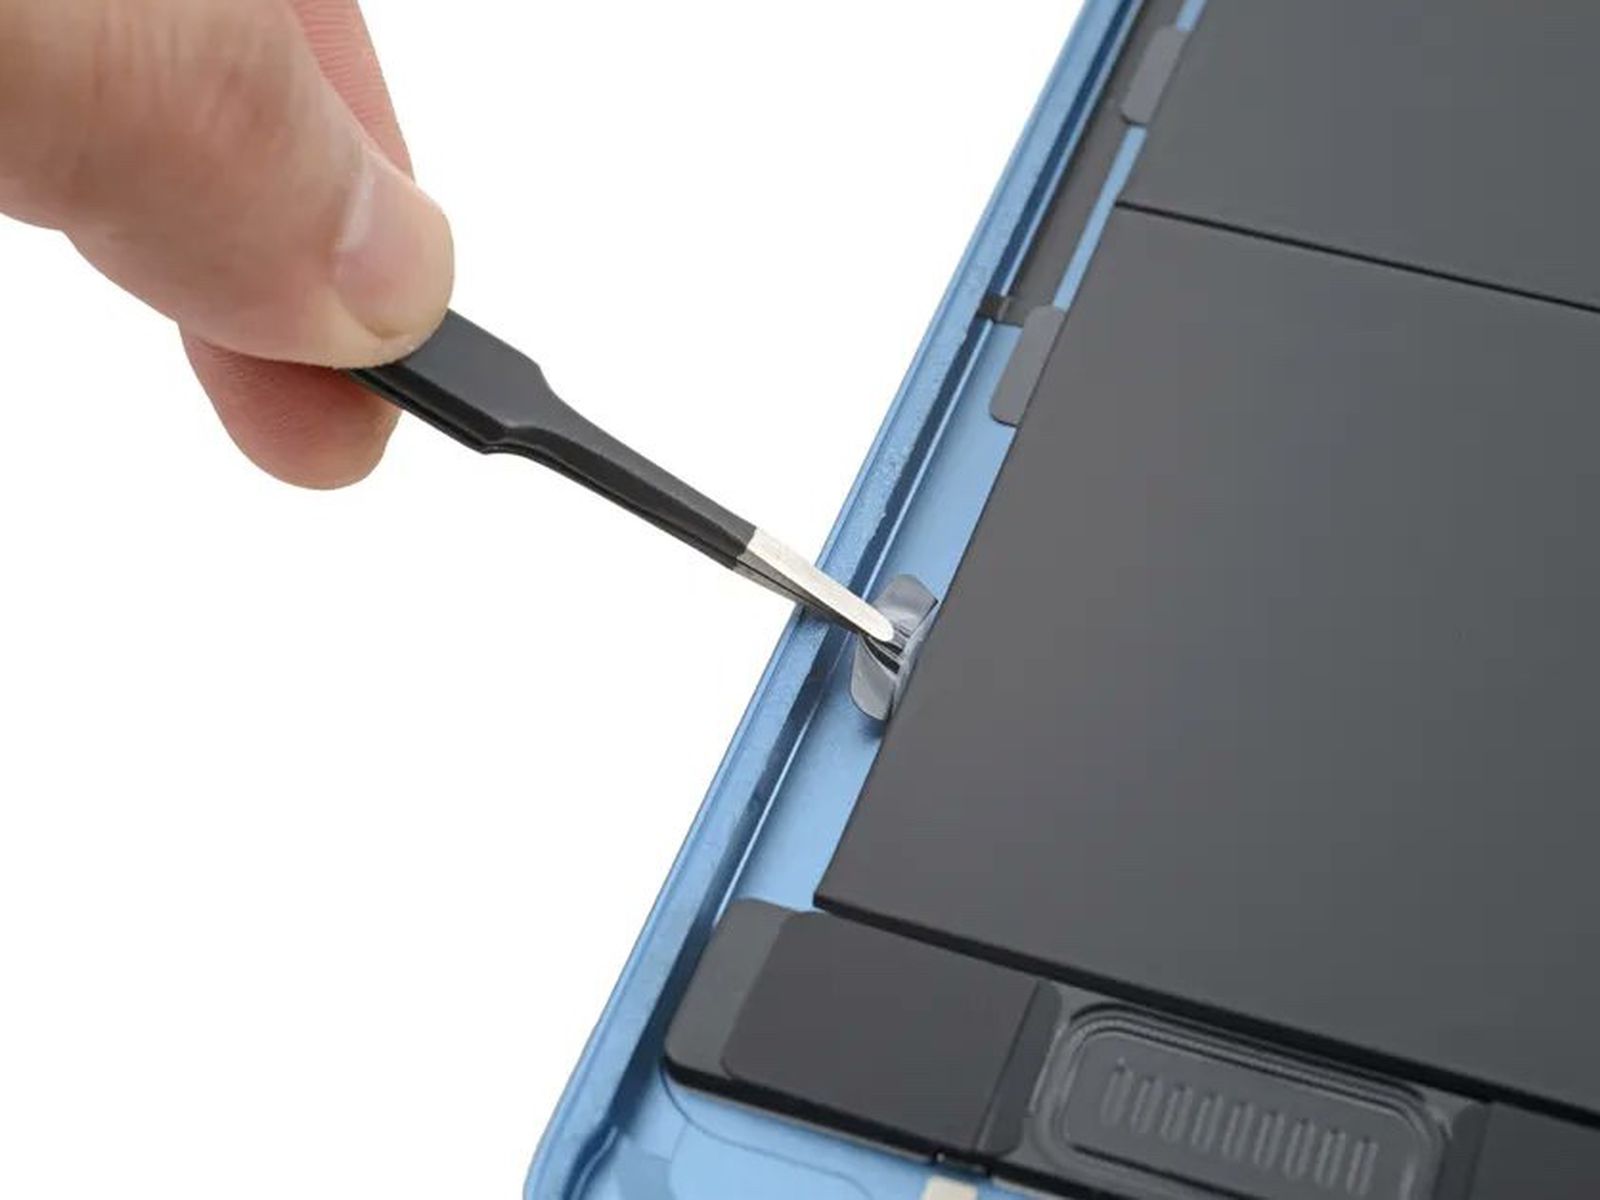 iPad Mini 2 Battery + iFixIt Tool Kit; Box Opened, Never Used